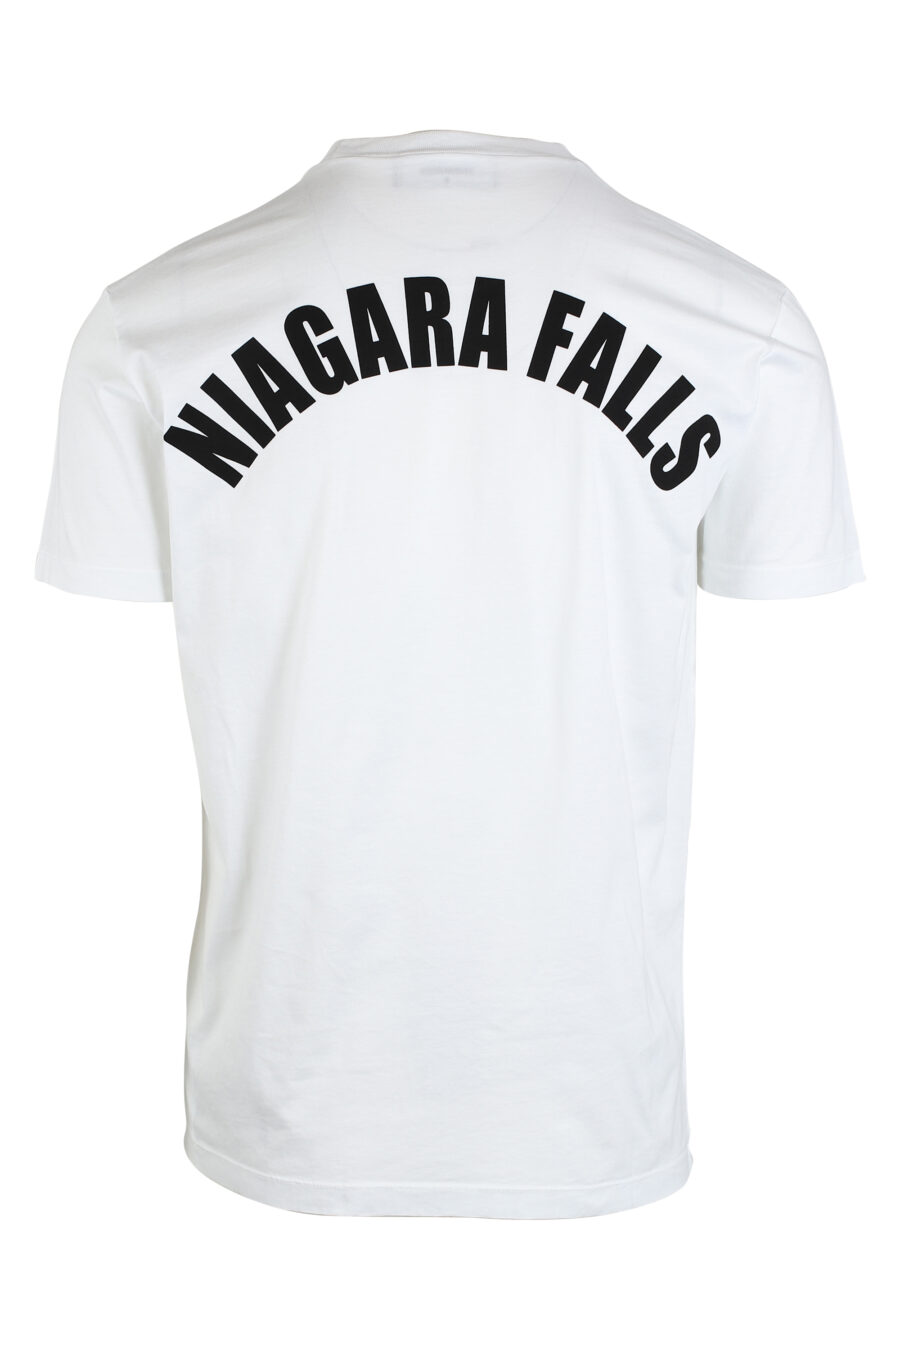 Camiseta blanca con minilogo negro - IMG 0672